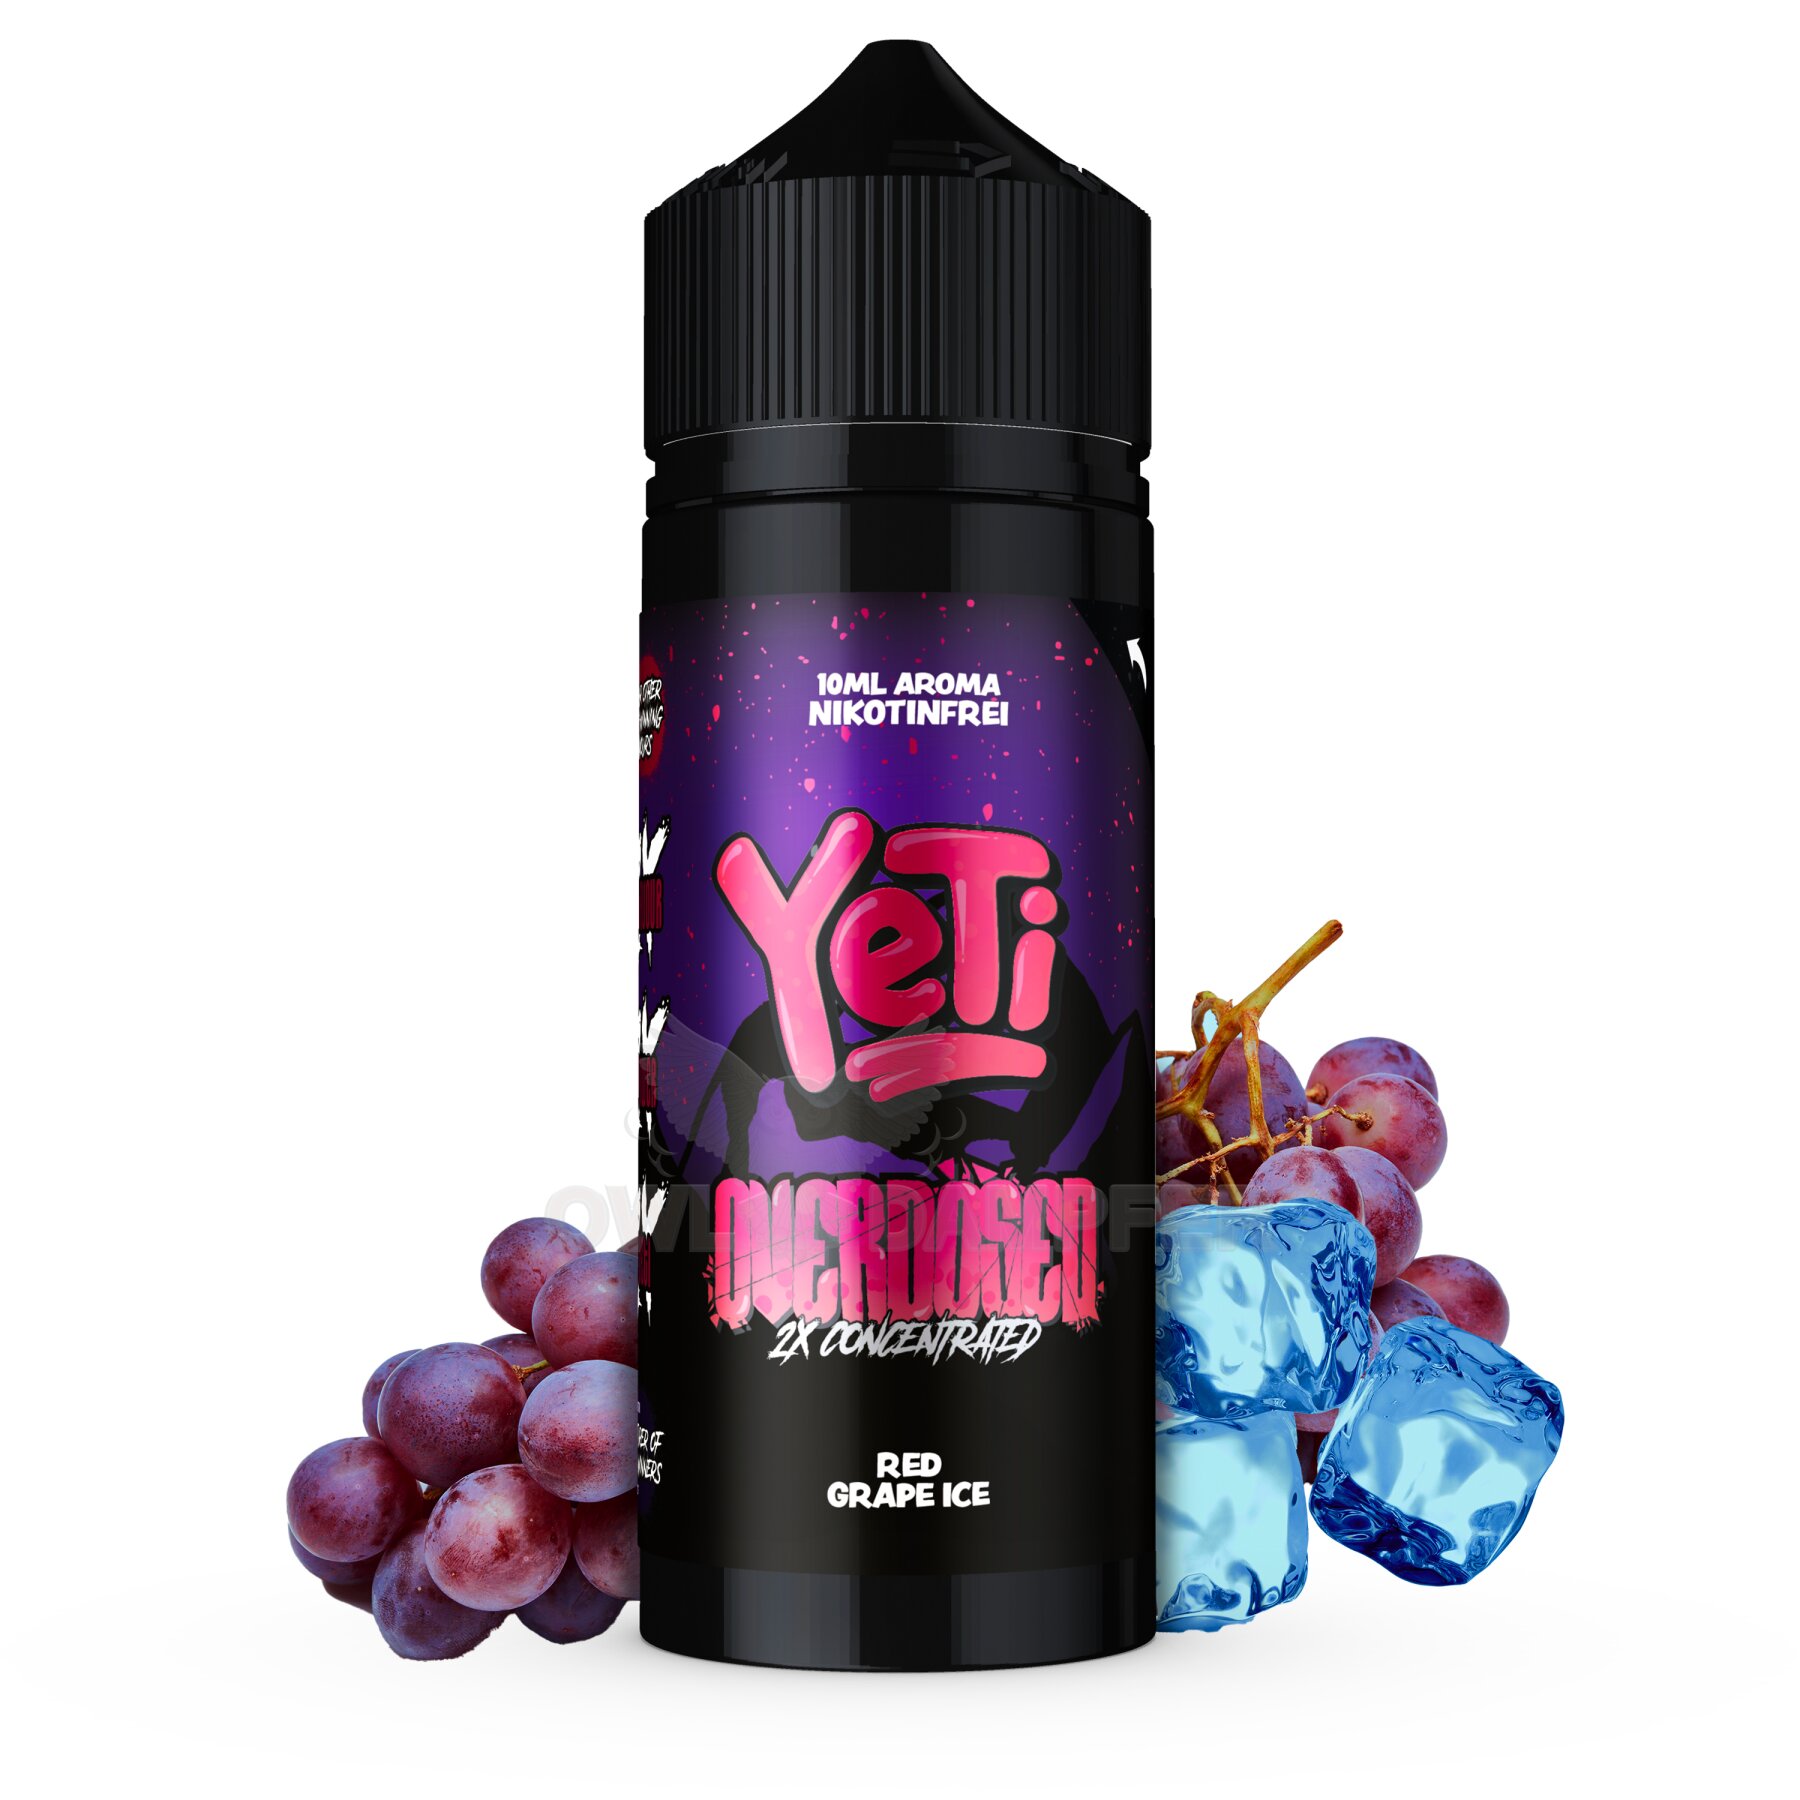 Yeti Overdosed Red Grape Ice 10ml in 120ml Flasche